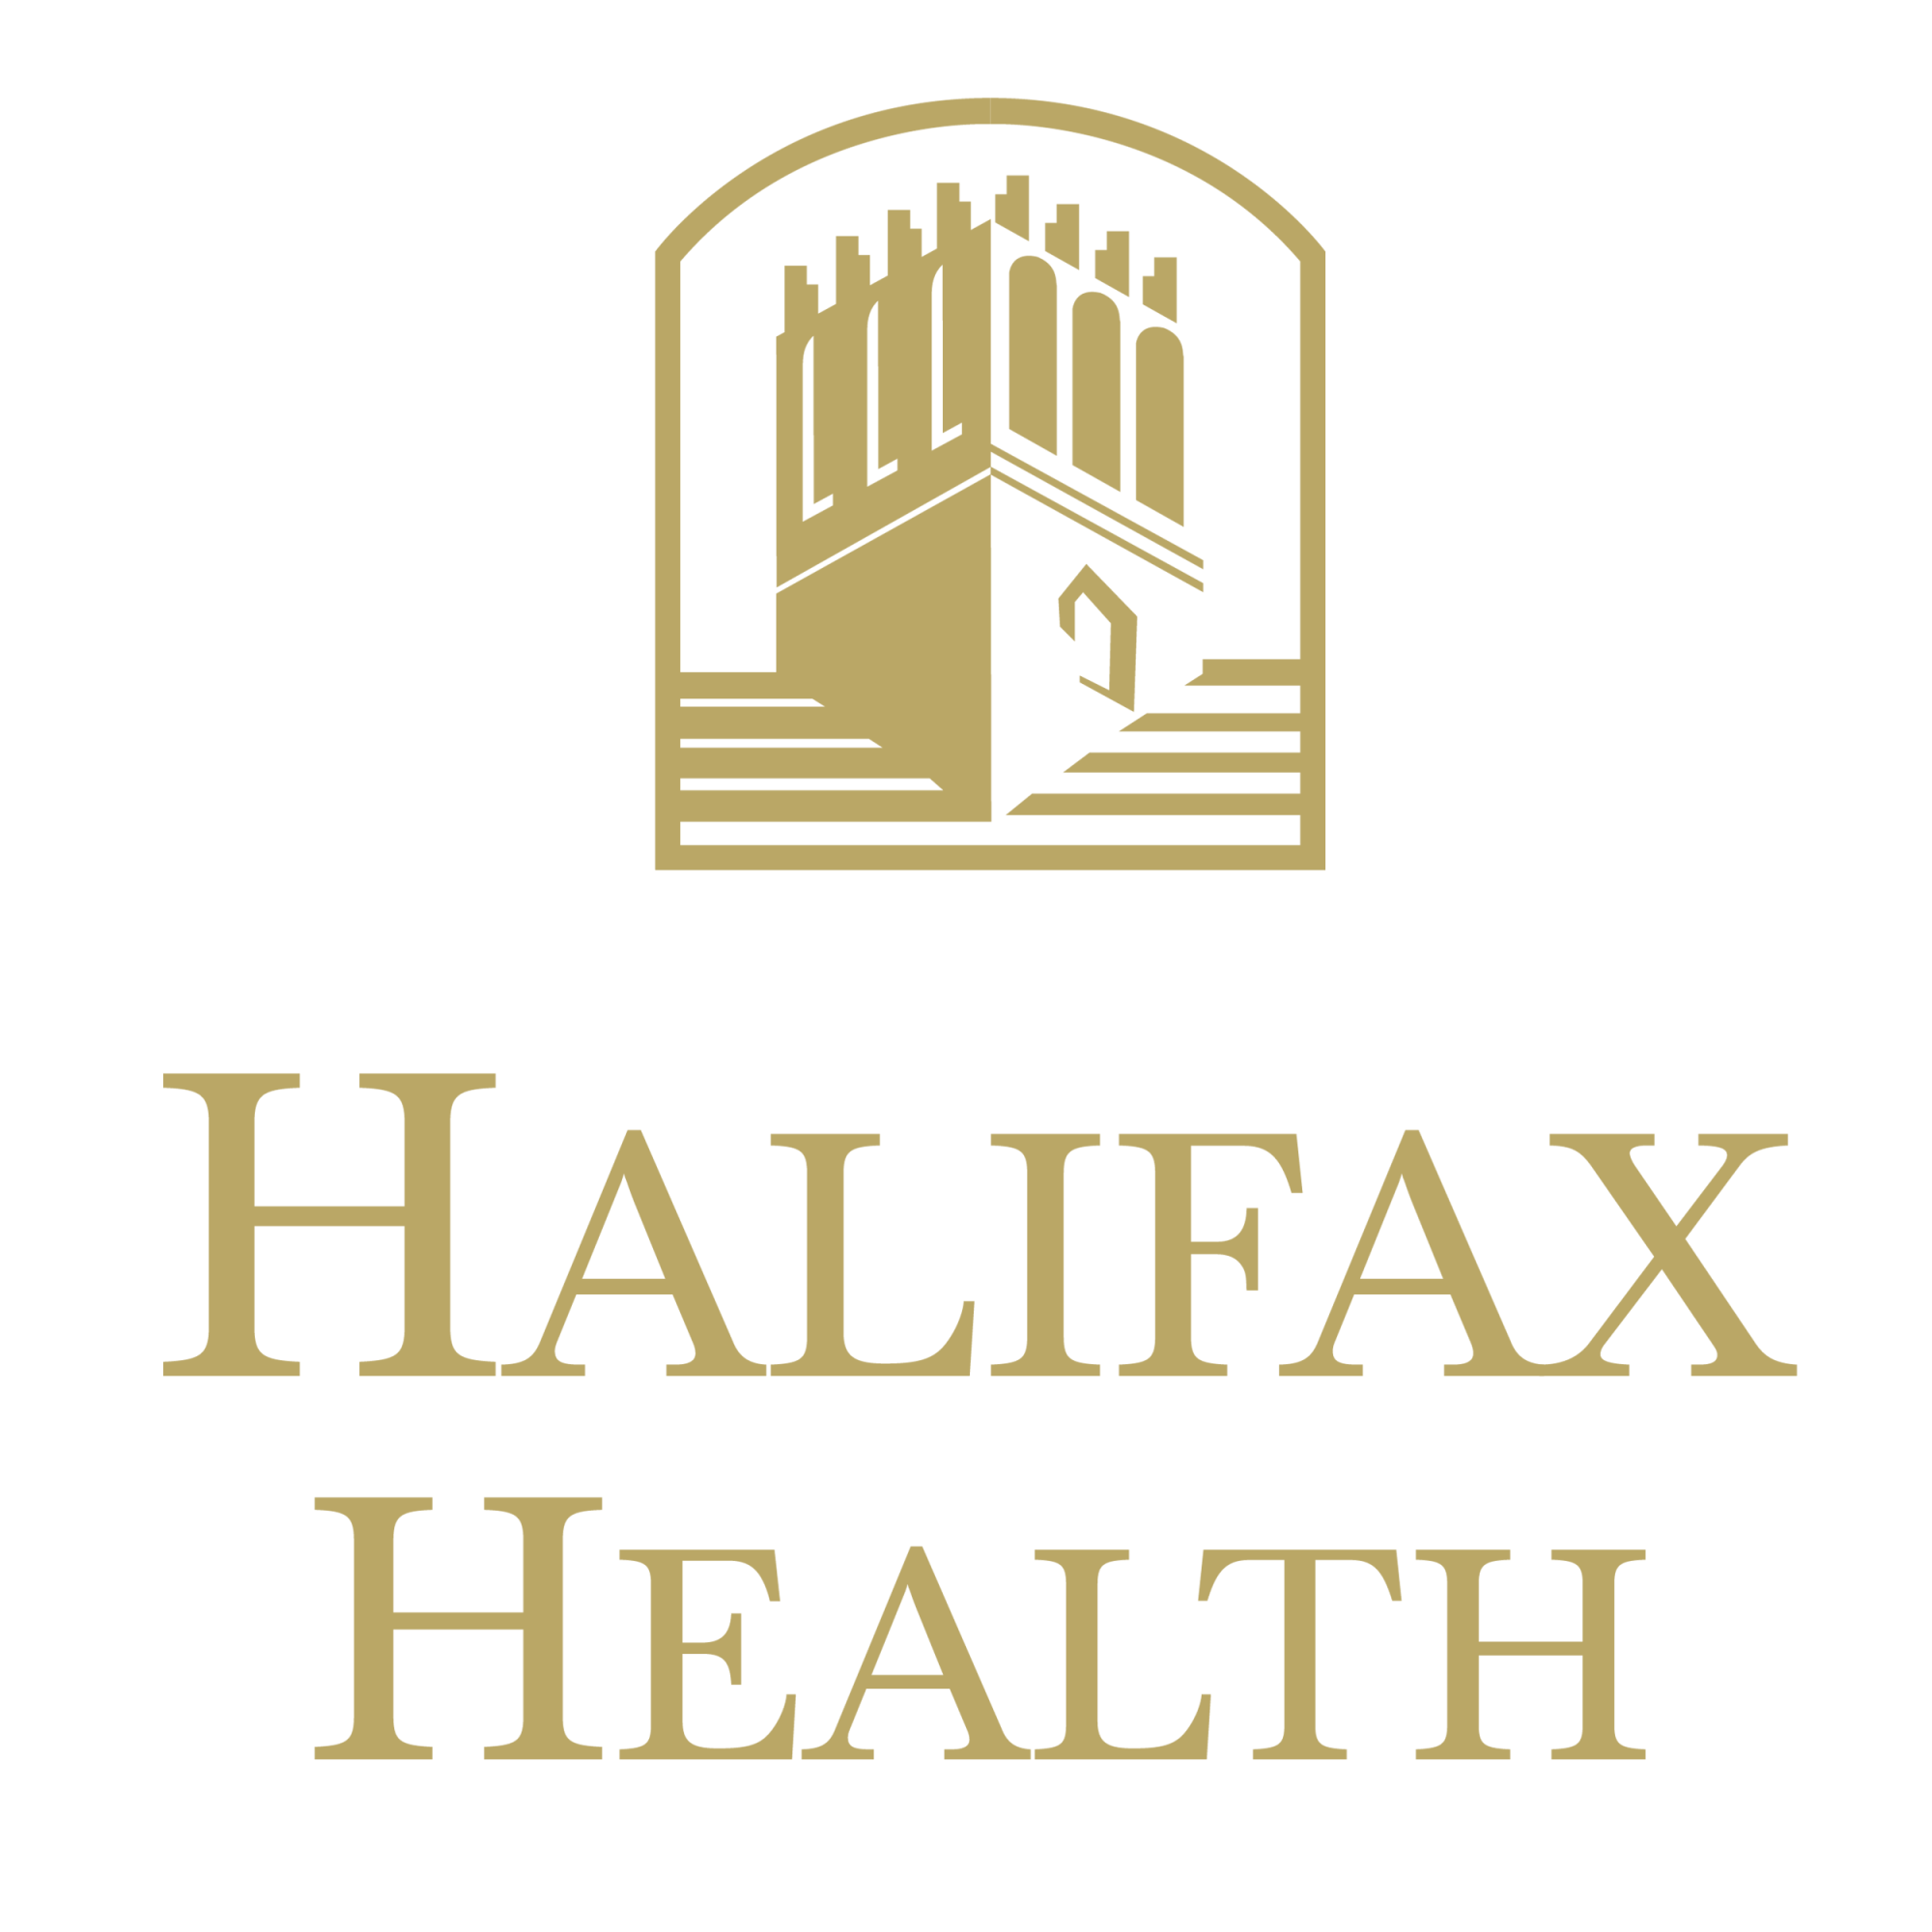 Halifax Health logo image